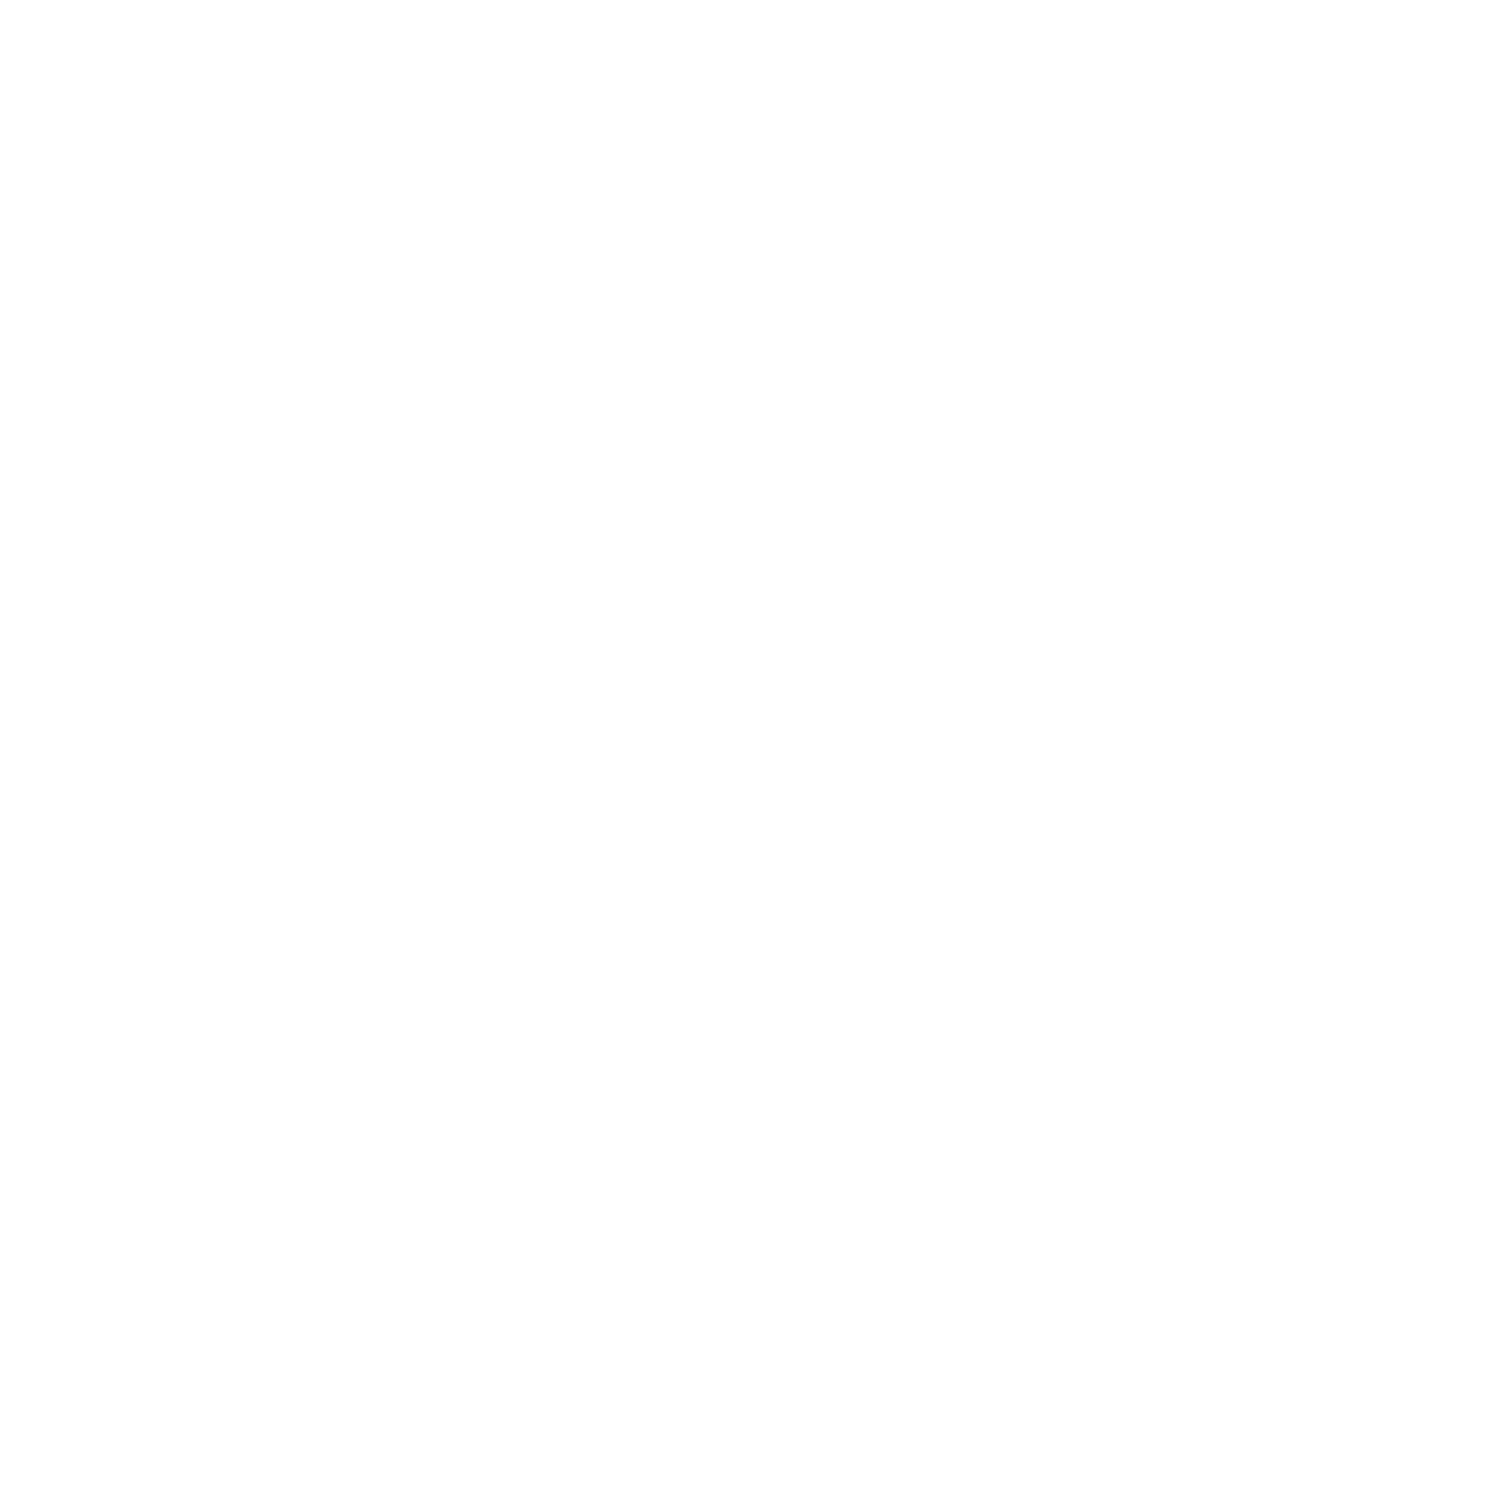 Photographer Liam Gillan